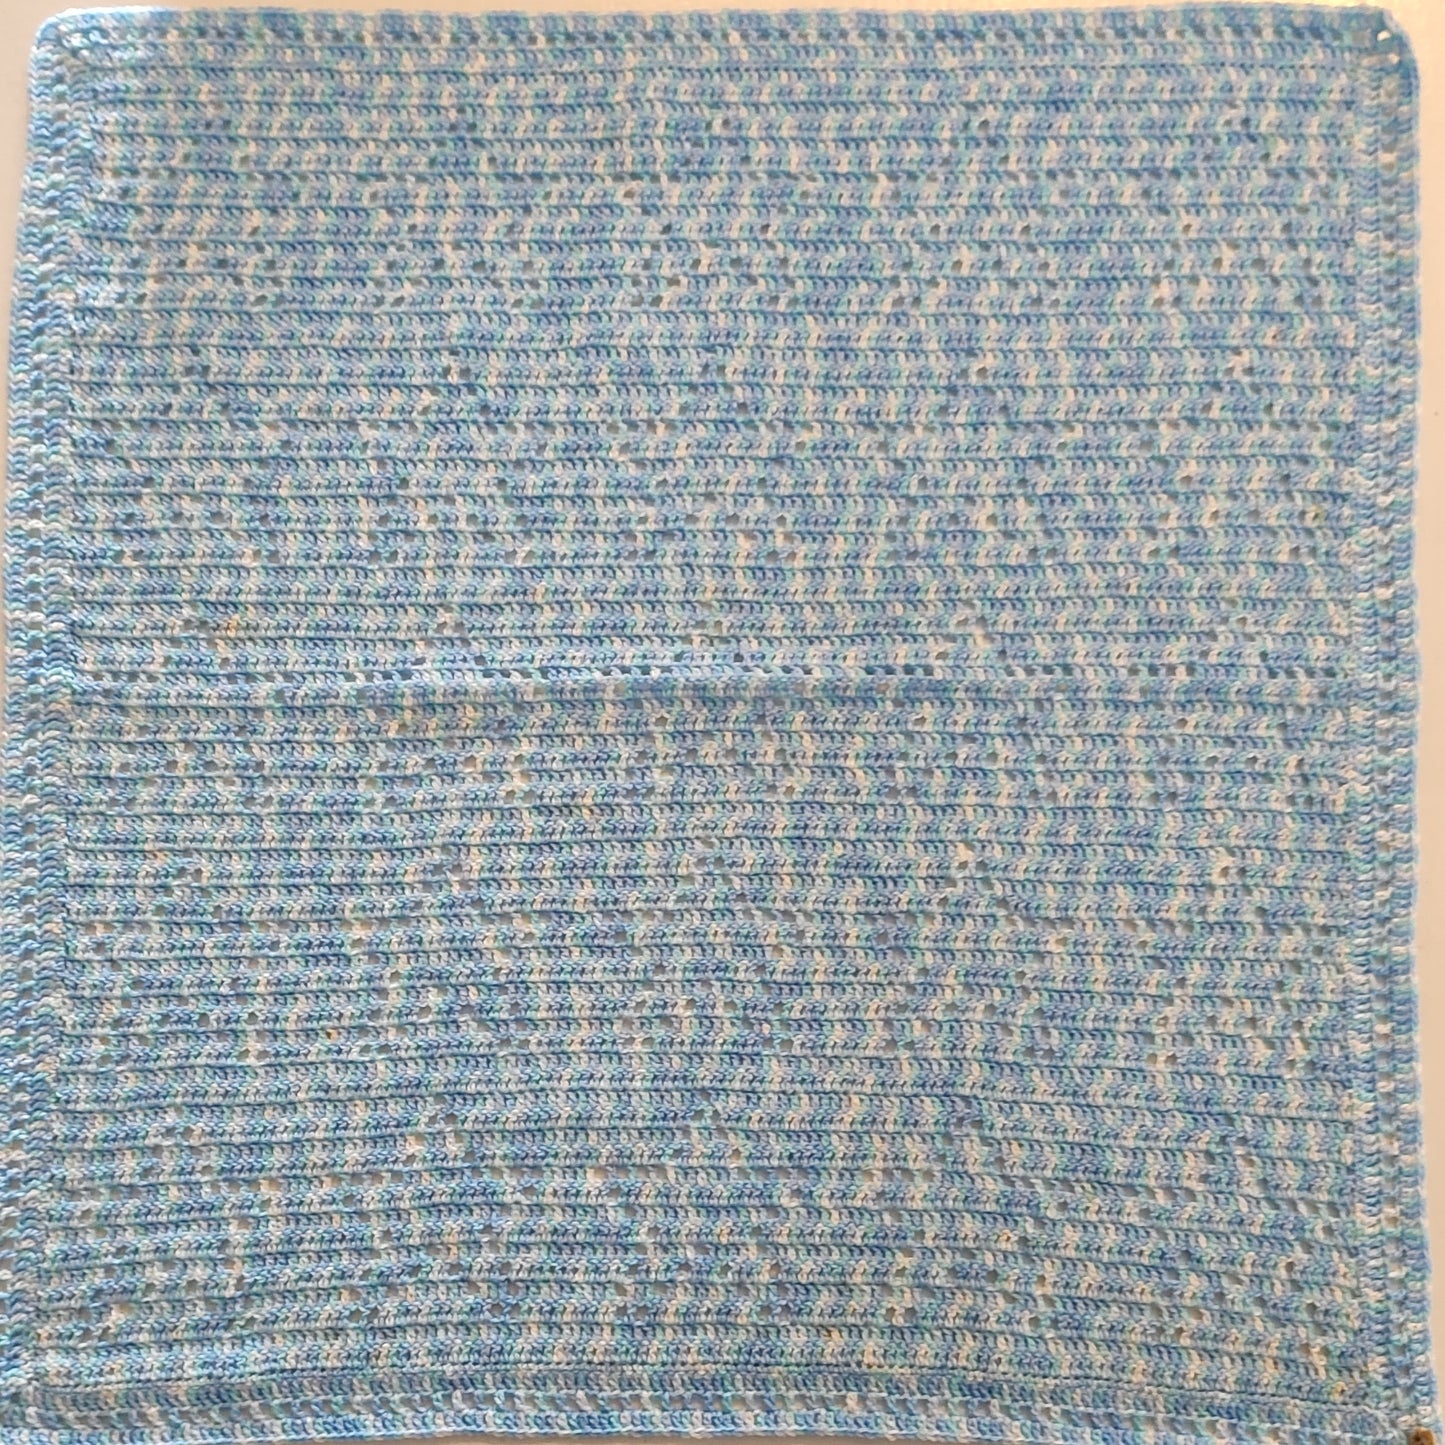 Crocheted Blanket - baby blanket